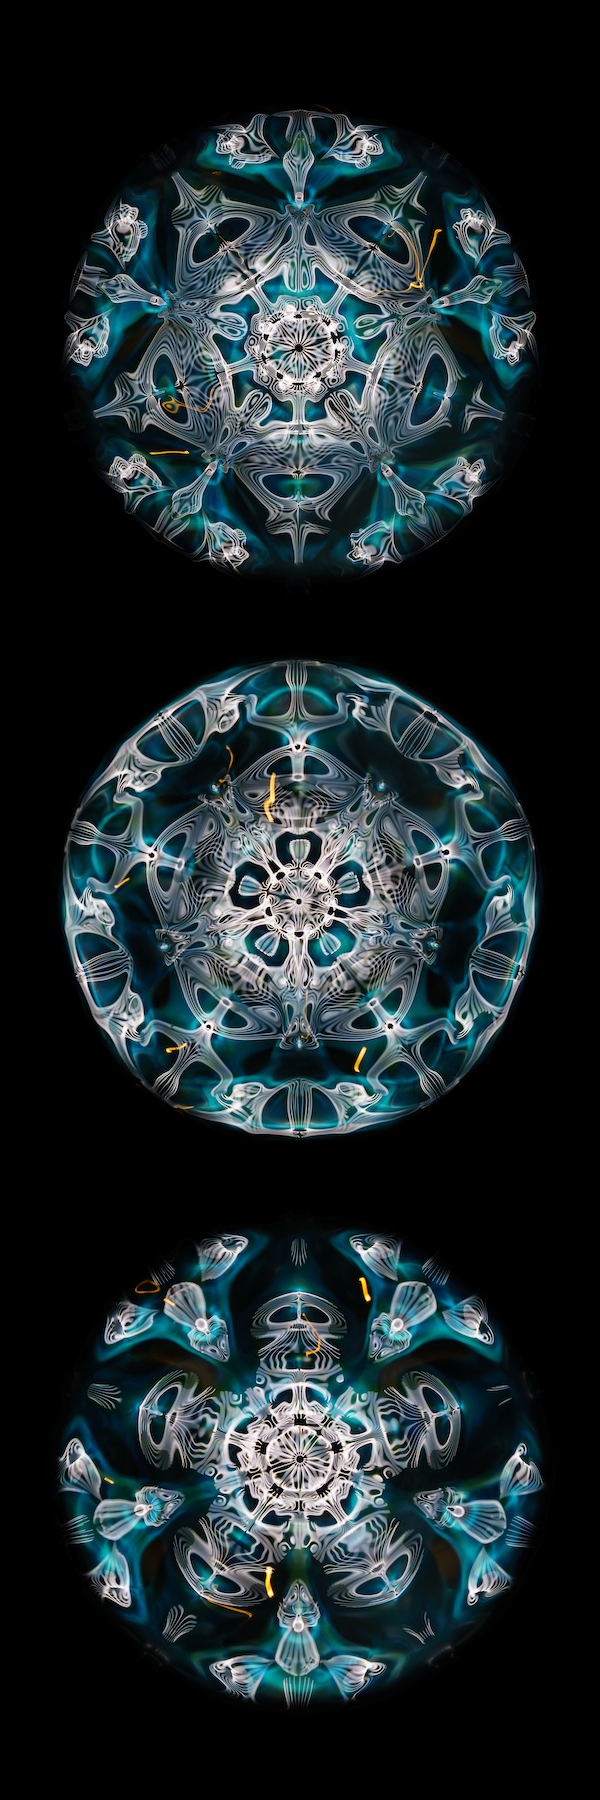 cymatics photo print Pentamerism - Journey of Curiosity